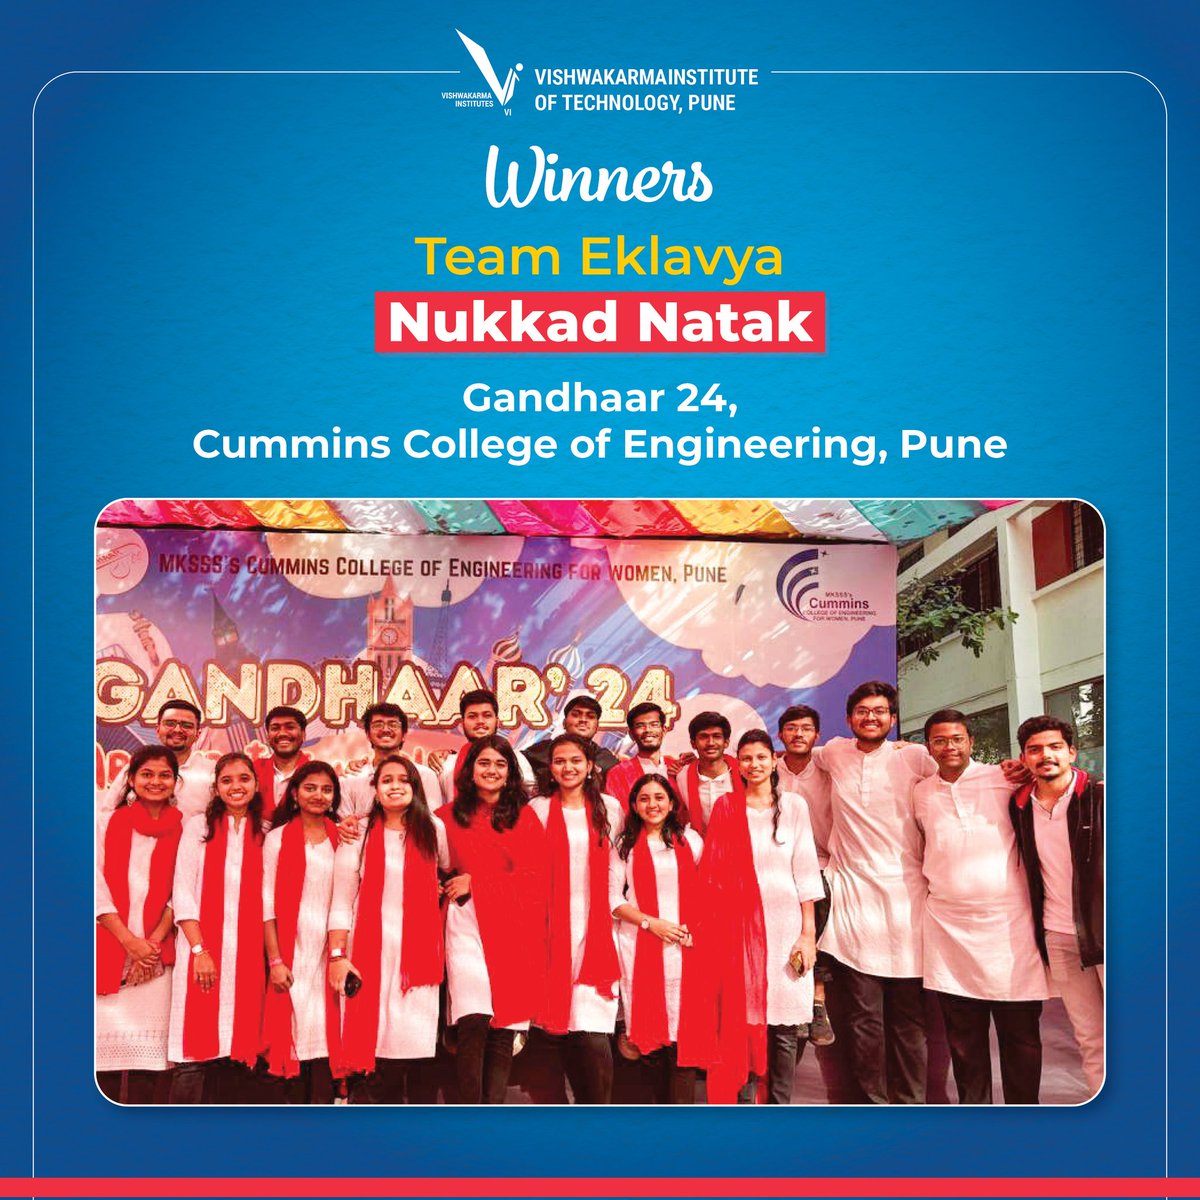 Congratulations to Team Eklavya, winners of the Nukkad Natak event at Gandhaar 24, Cummins College of Engineering, Pune!
#congratulations #winners #natak #engineeringinstitute #engineeringcollege #engineeringcollege #vitstudents #vitpune